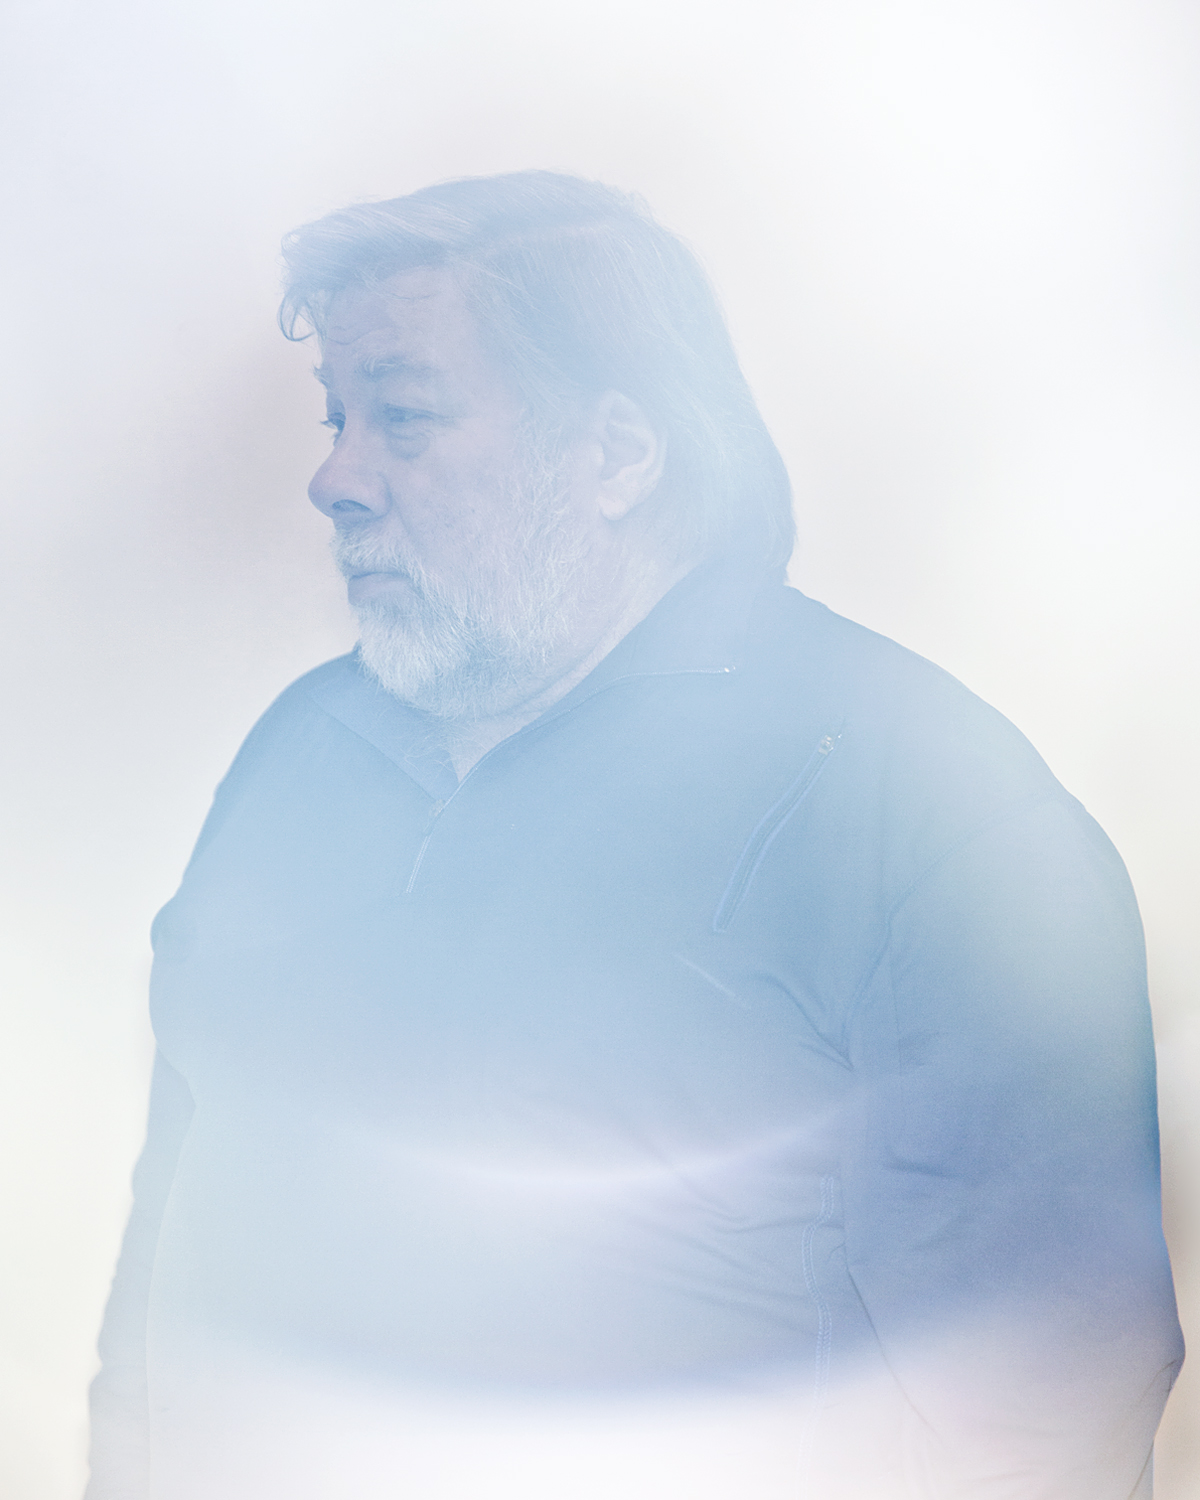  Steve Wozniak for WIRED. 